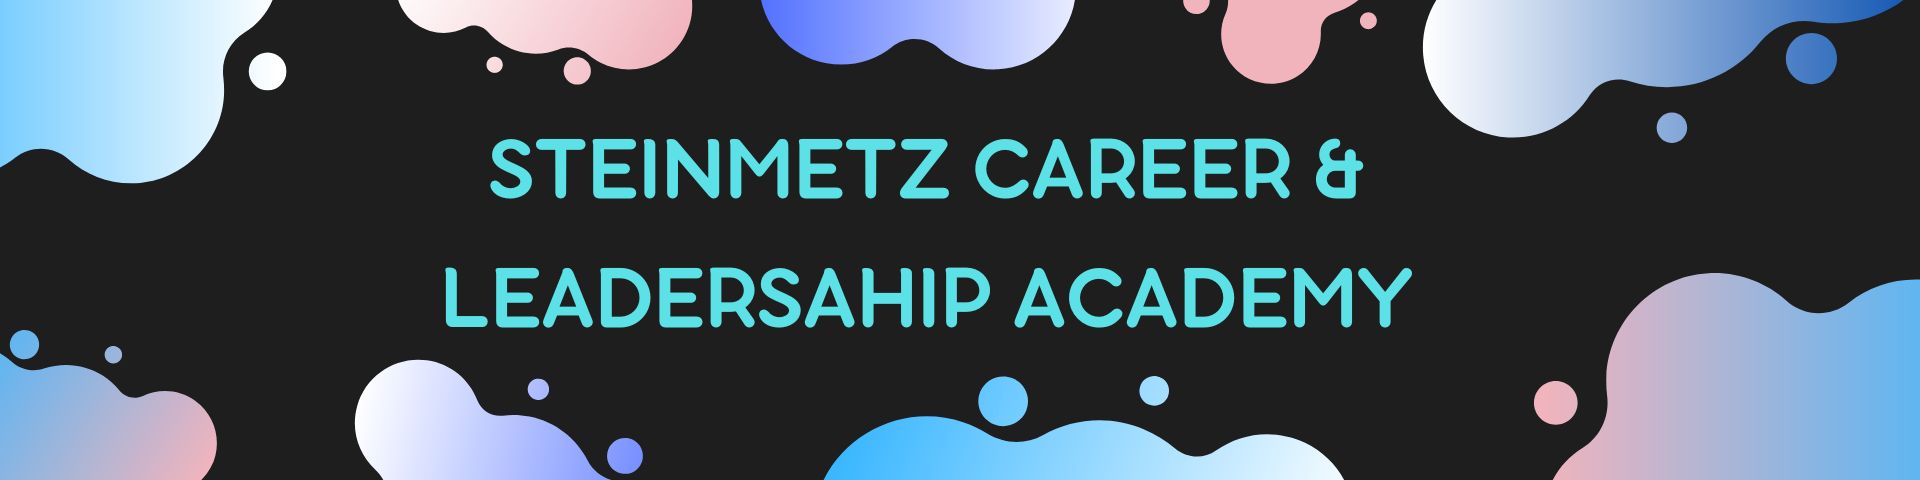 Steinmetz Career and Leadership Academy